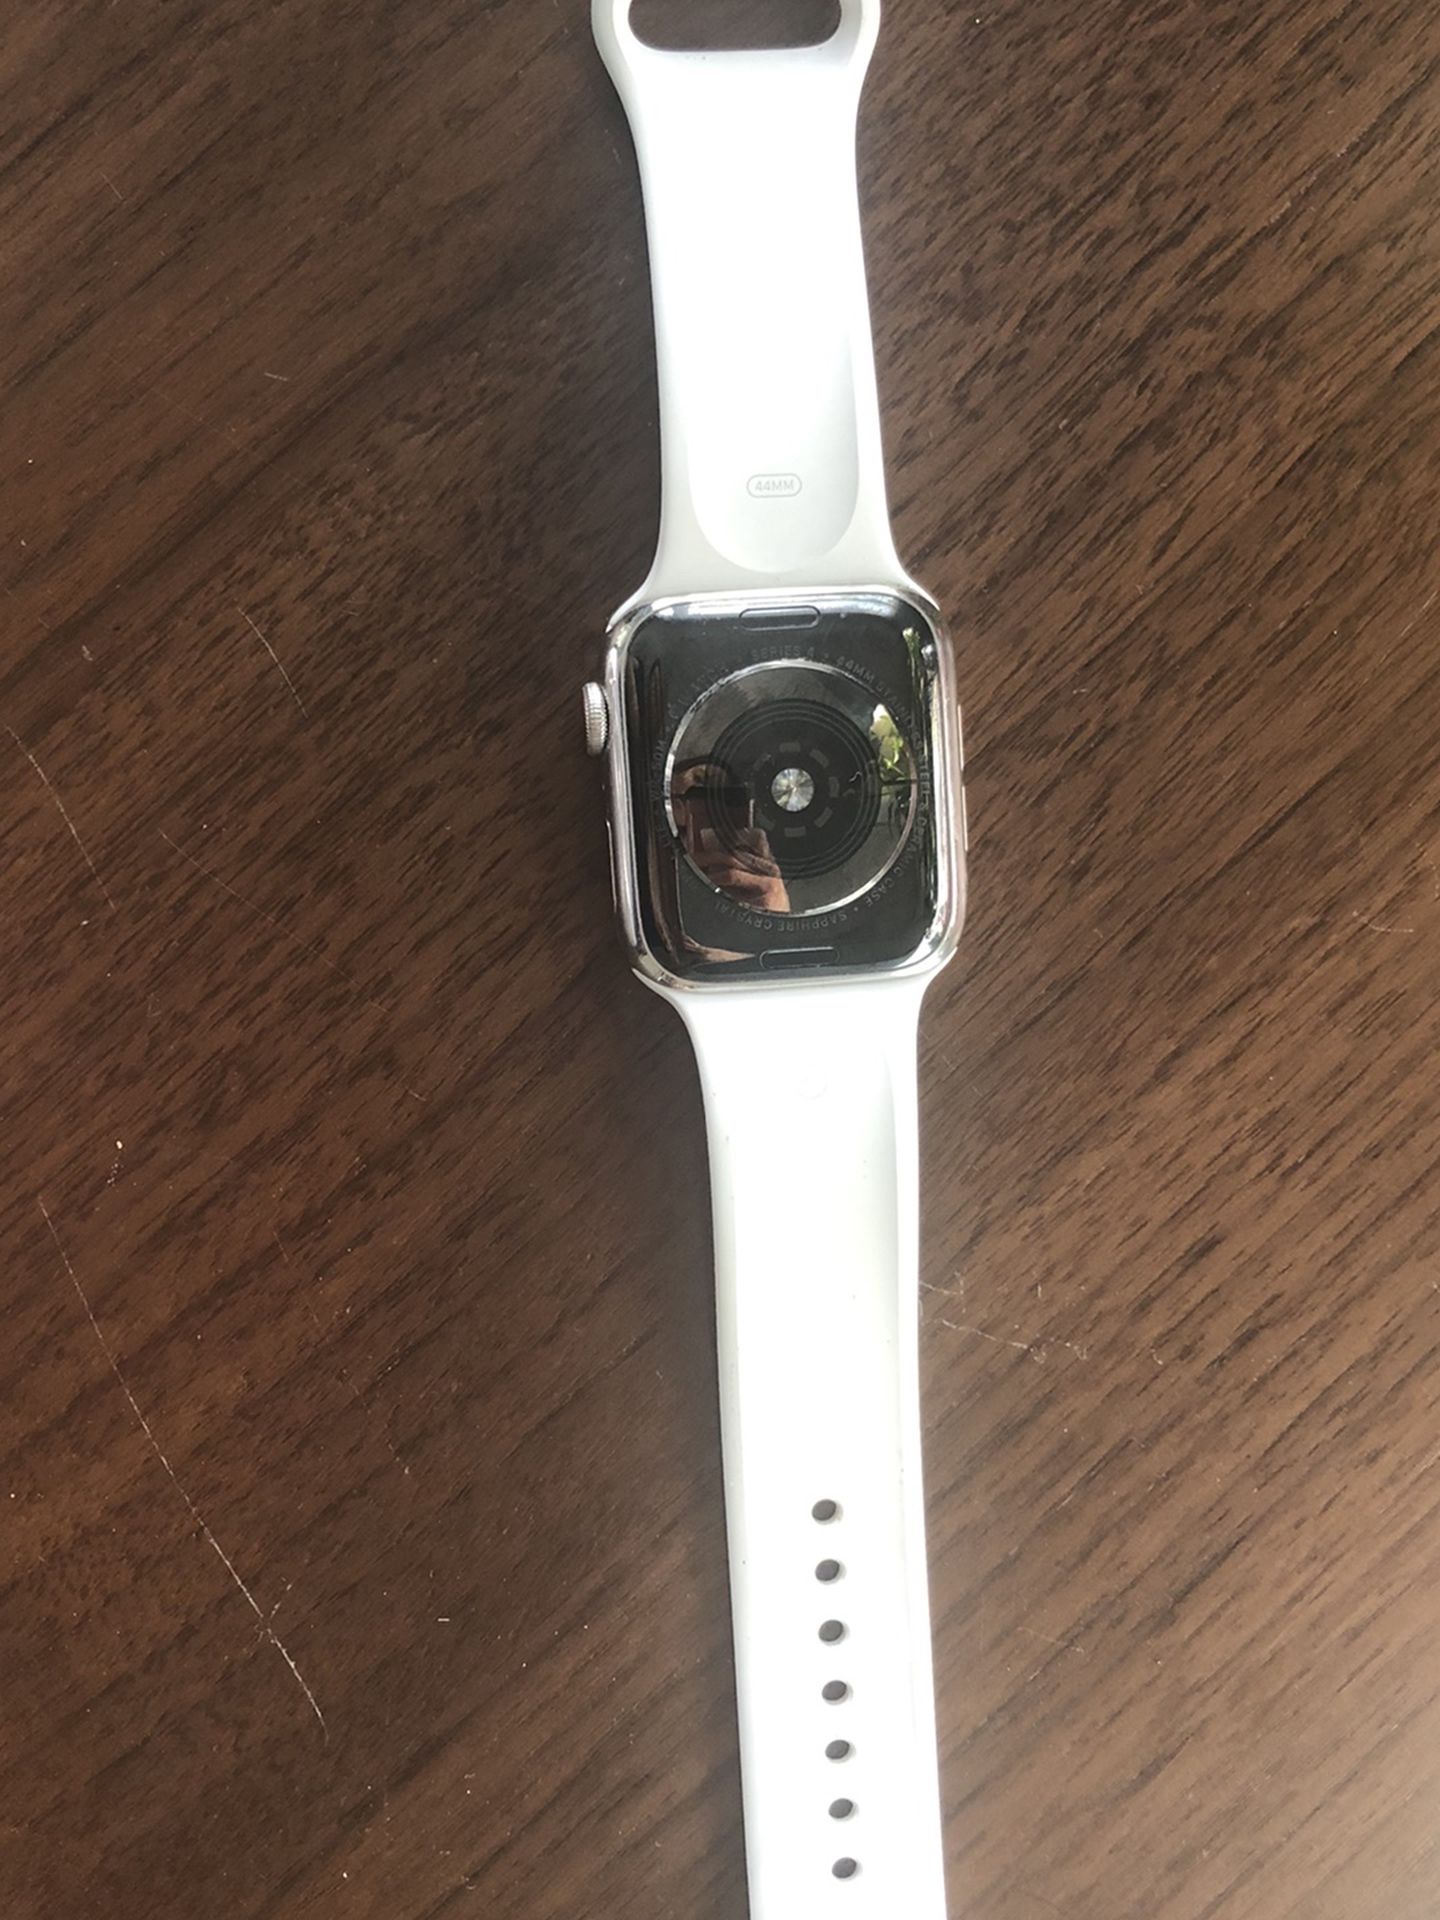 Apple Watch Series 4 Cellular